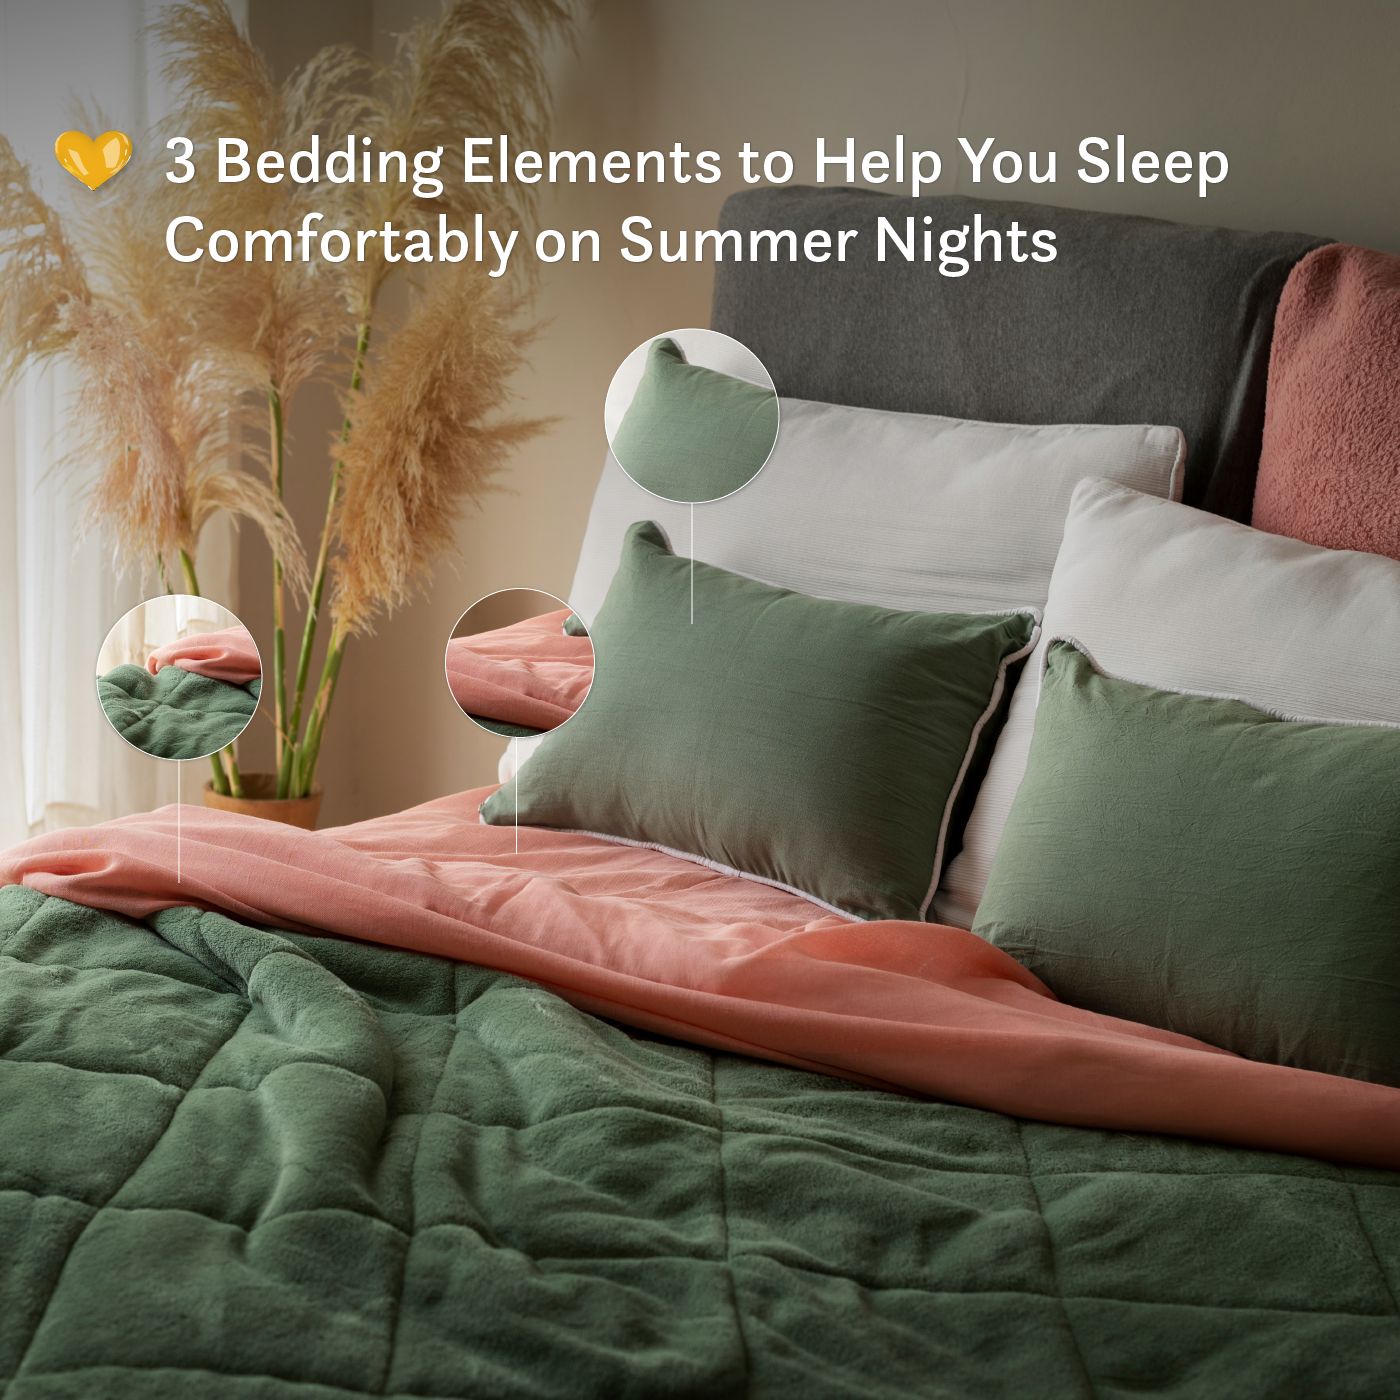 3 Bedding Elements to Help You Sleep Comfortably on Summer Nights